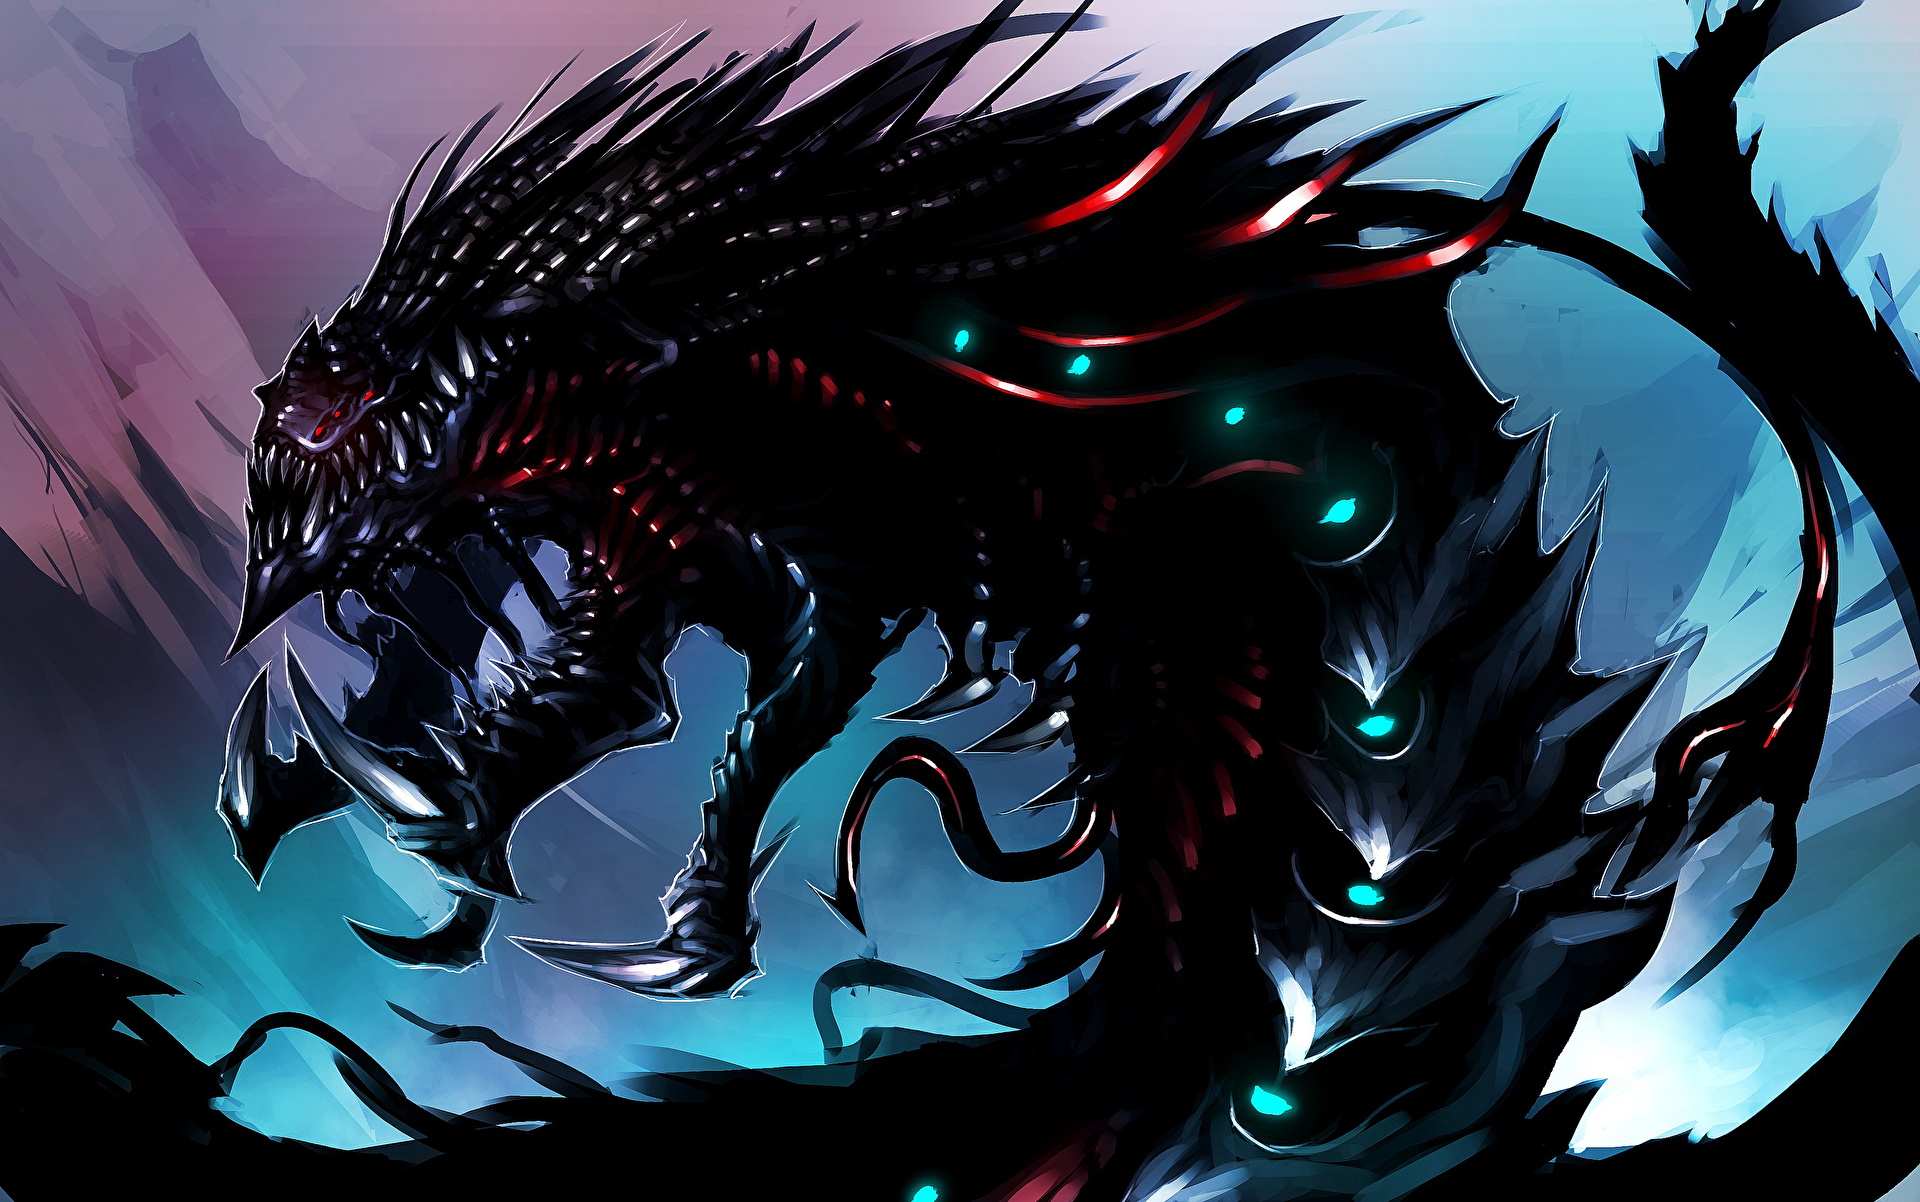 Маласса дракон тьмы